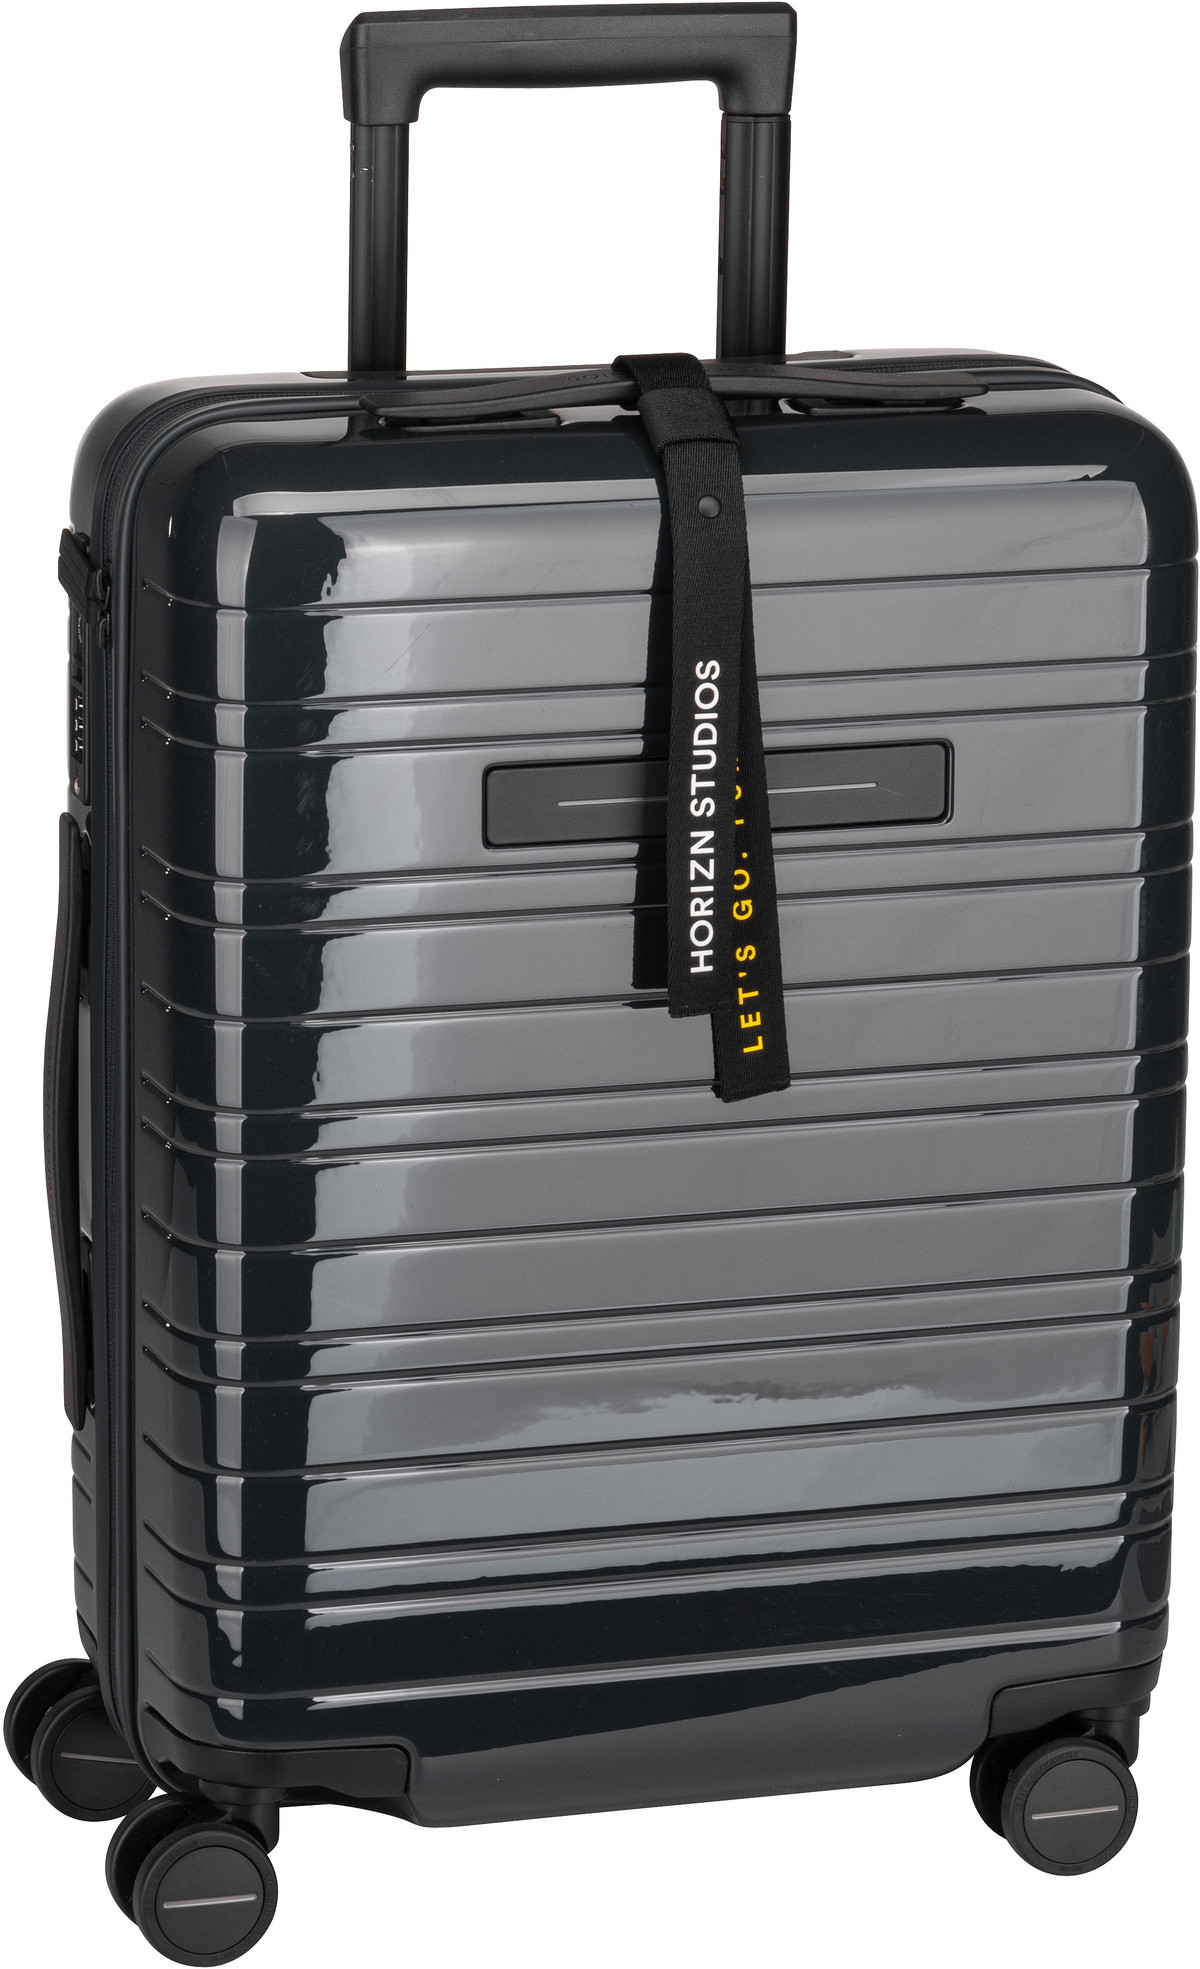 Horizn Studios Horizn Studios H5 Essential Cabin Luggage in Navy (35.5 Liter), Koffer & Trolley